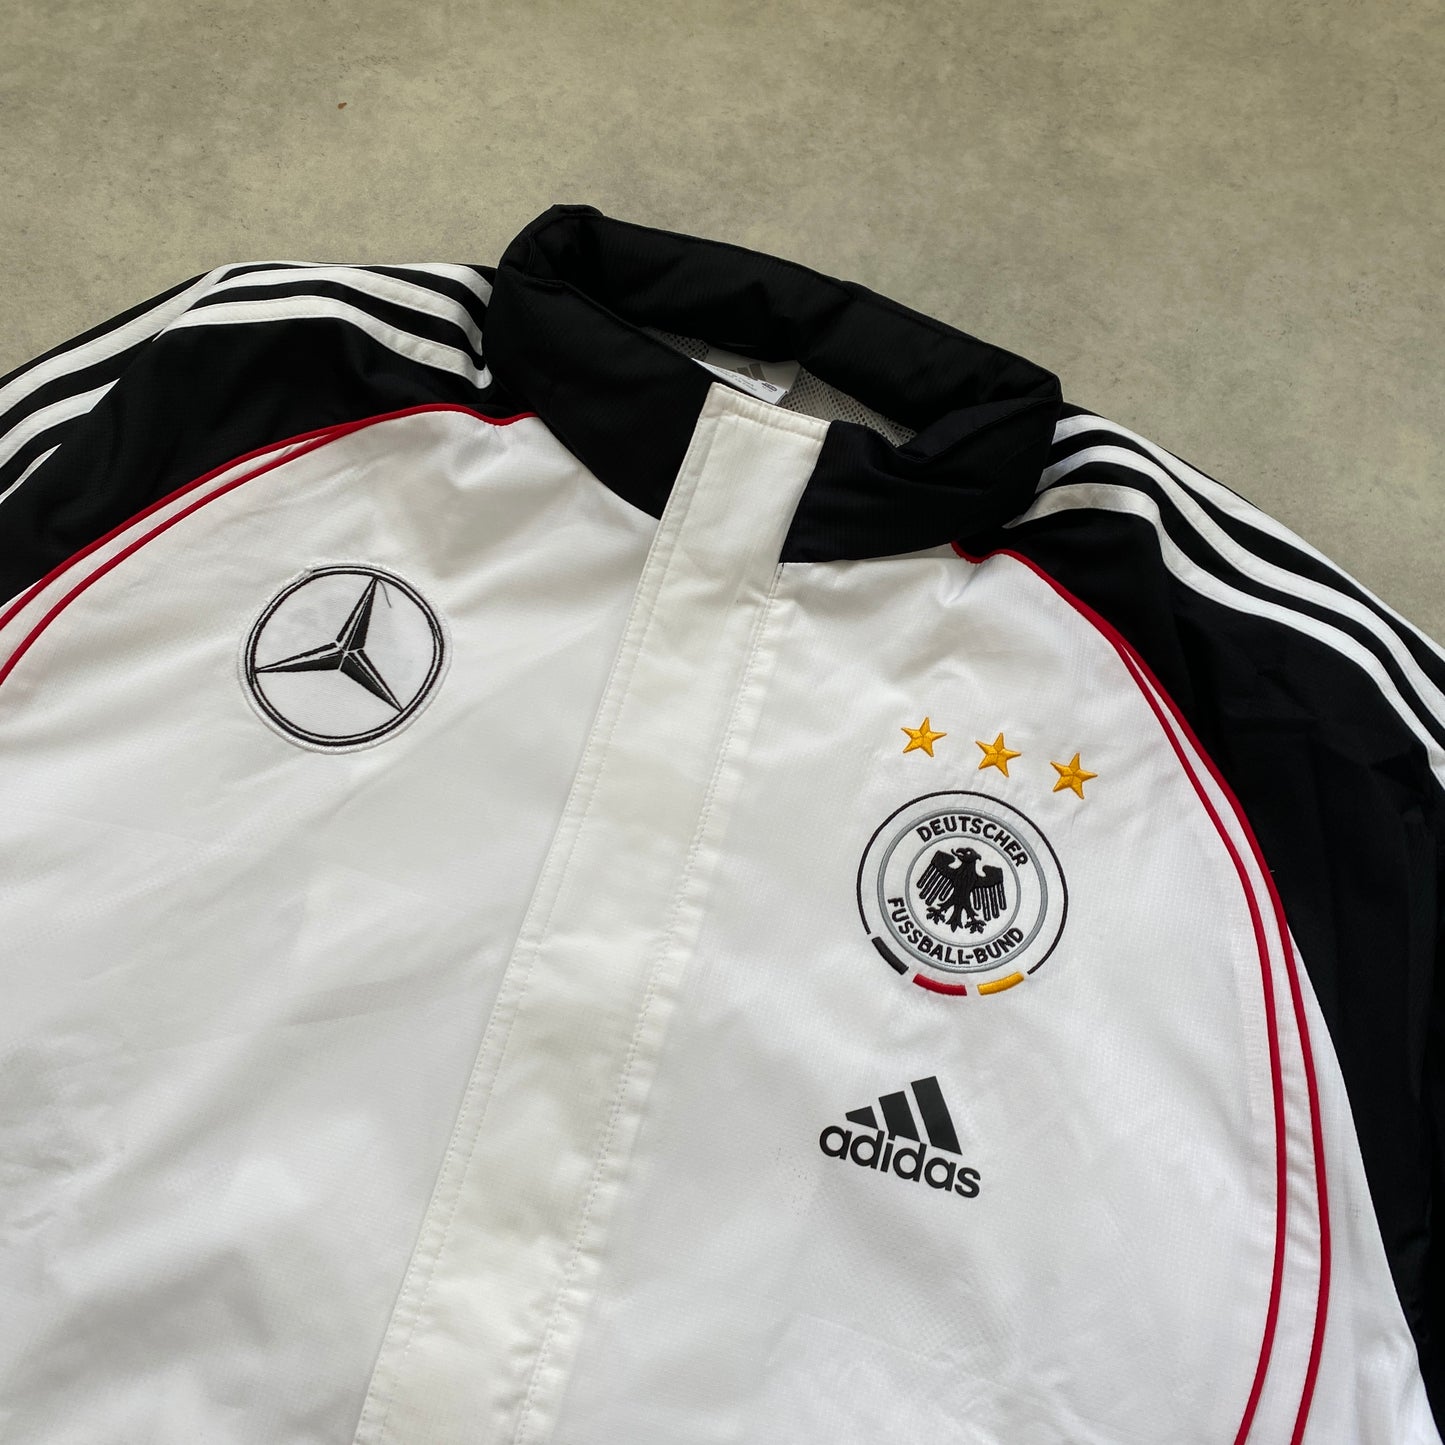 Adidas Germany track jacket (L)